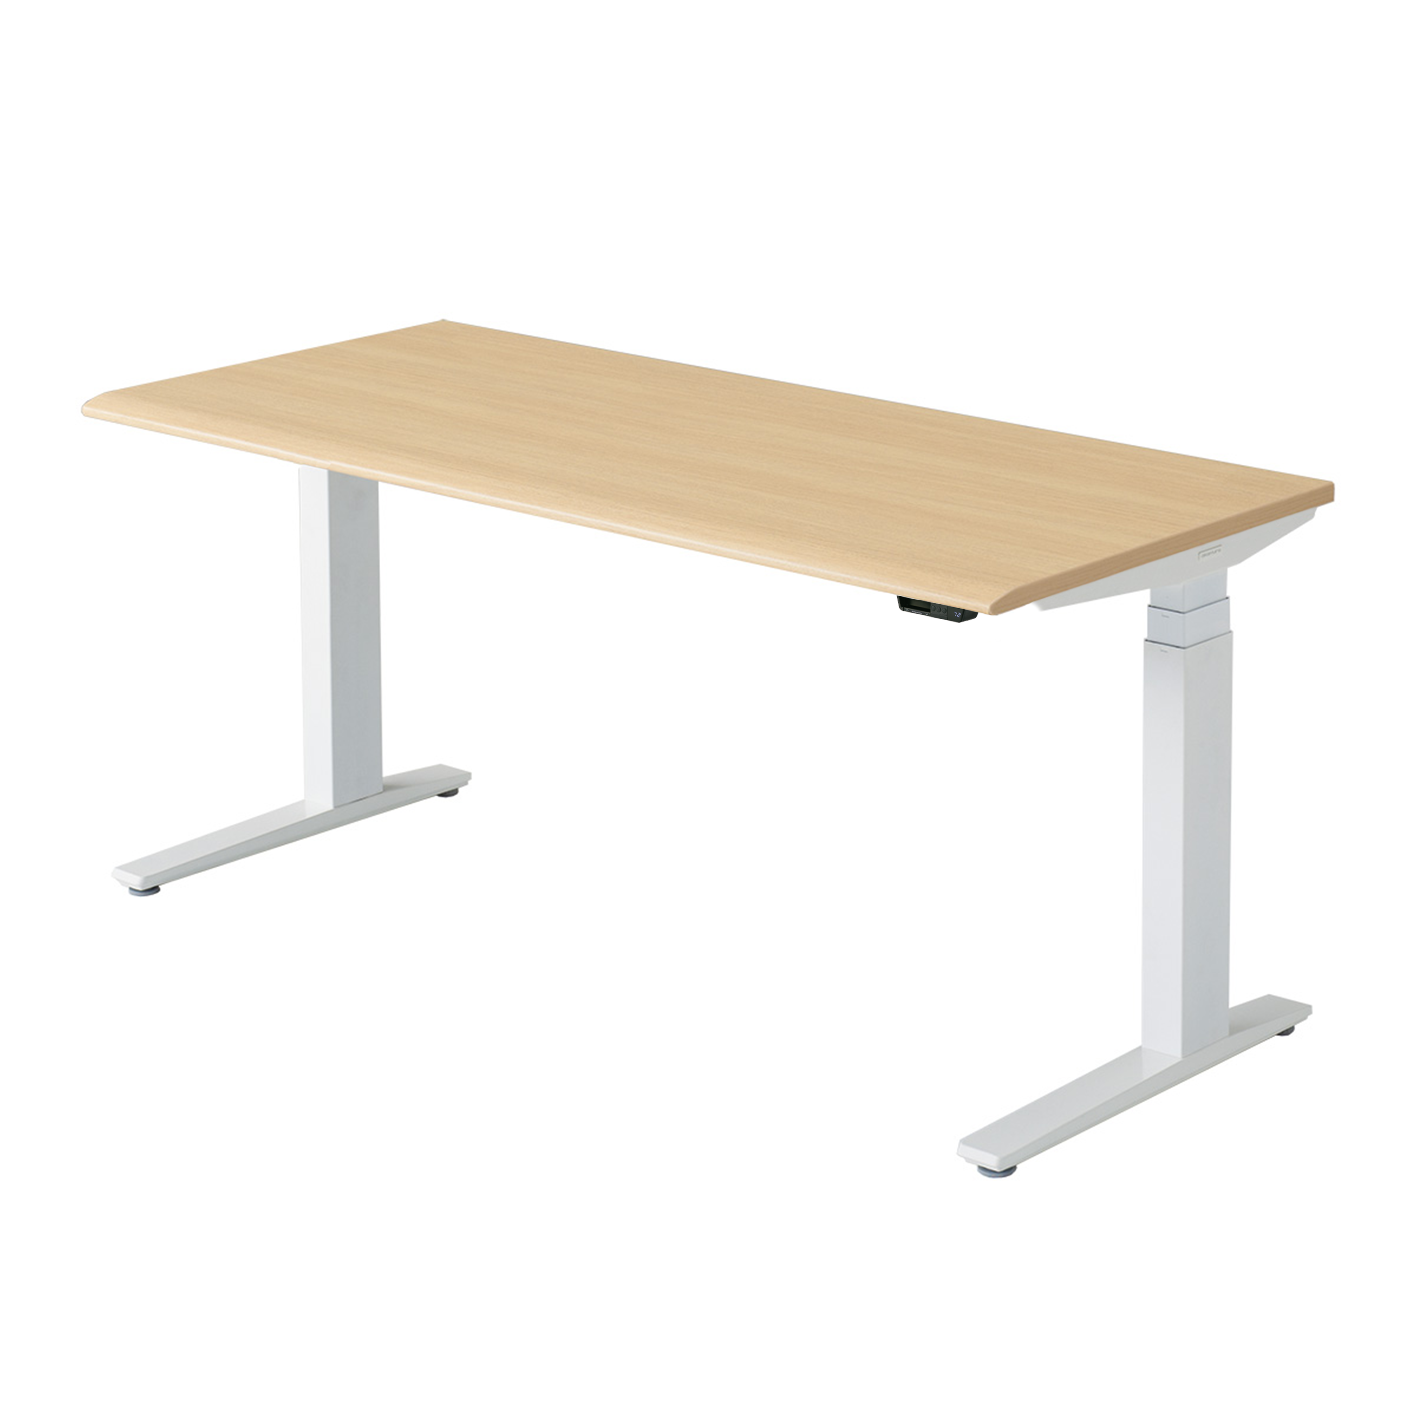 Okamura SW height adjustable table in light wood